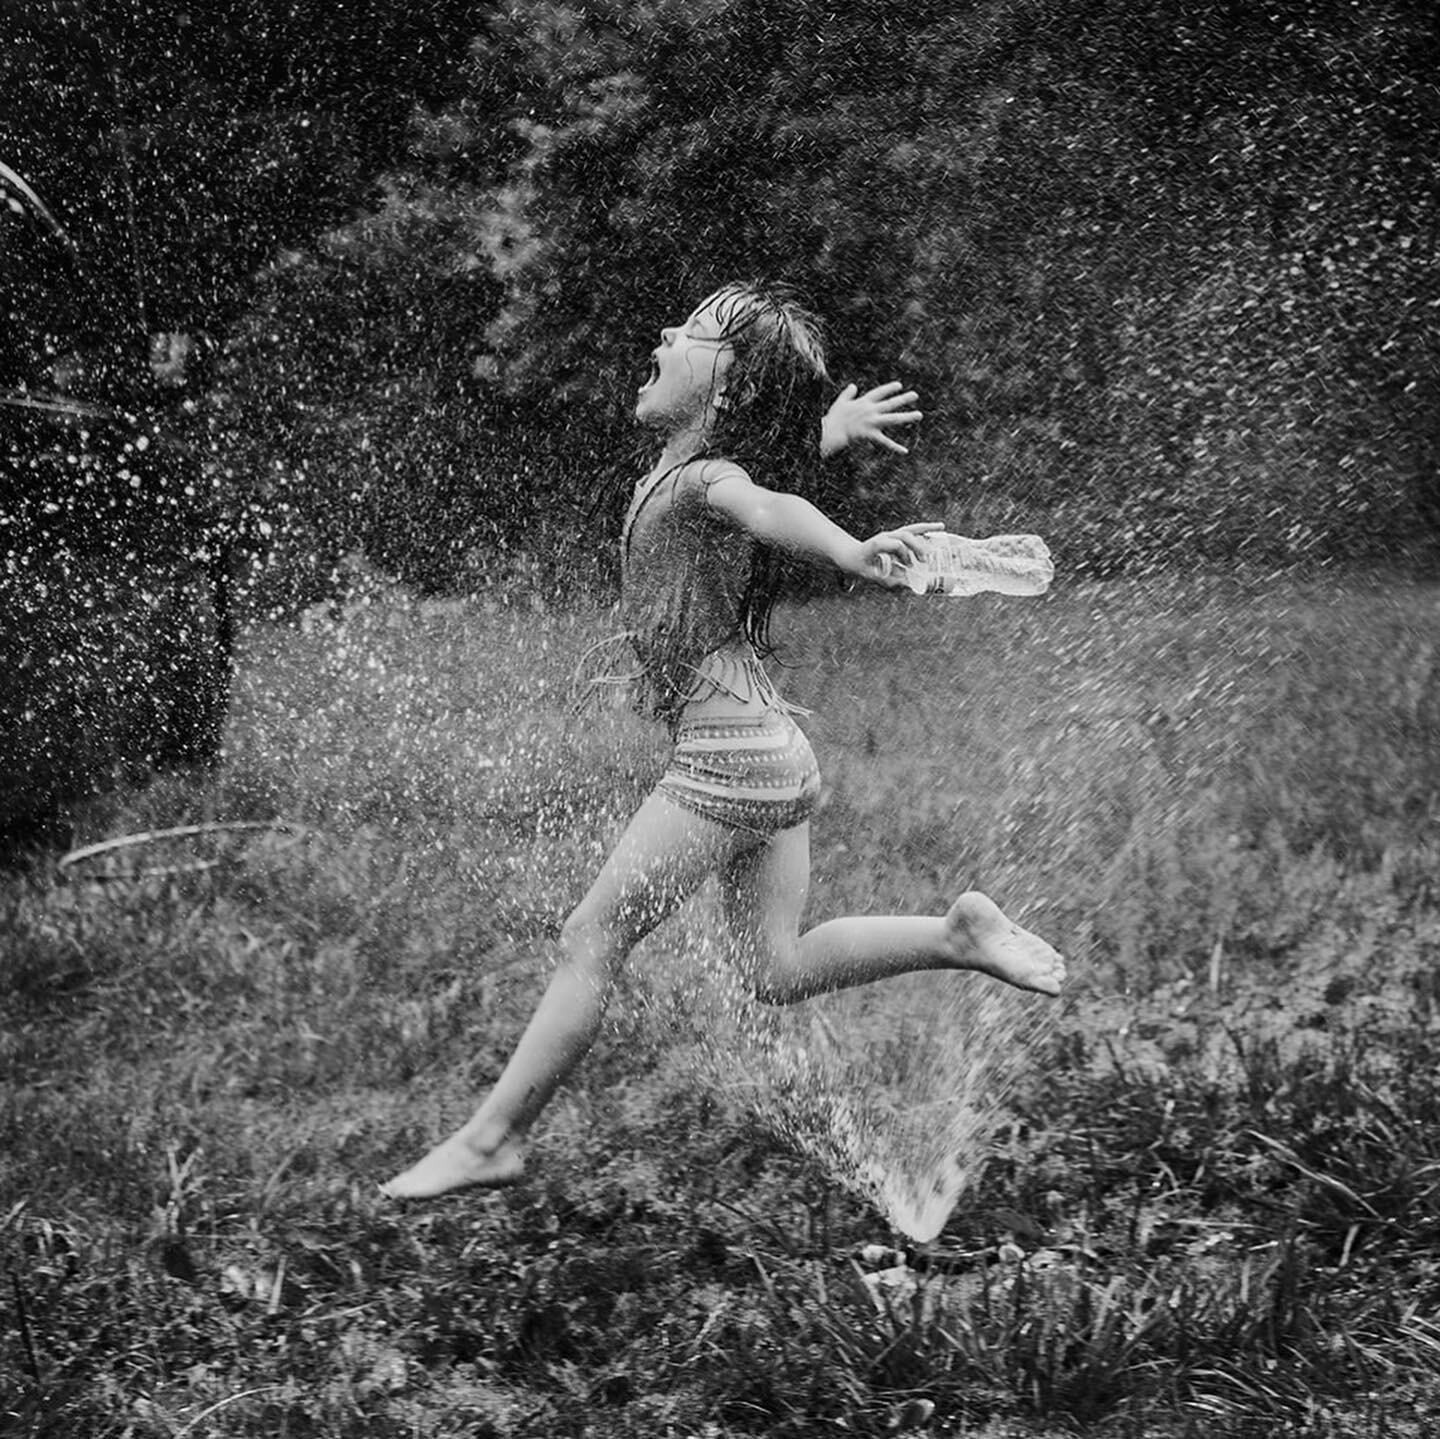 Hot days, playing in the hose. 
Childhood ❤️
.
#childhood #adayinthelife #letthembelittle #capurethemoment #documentaryphotography #theextraordinaryordinary #reallifemoments